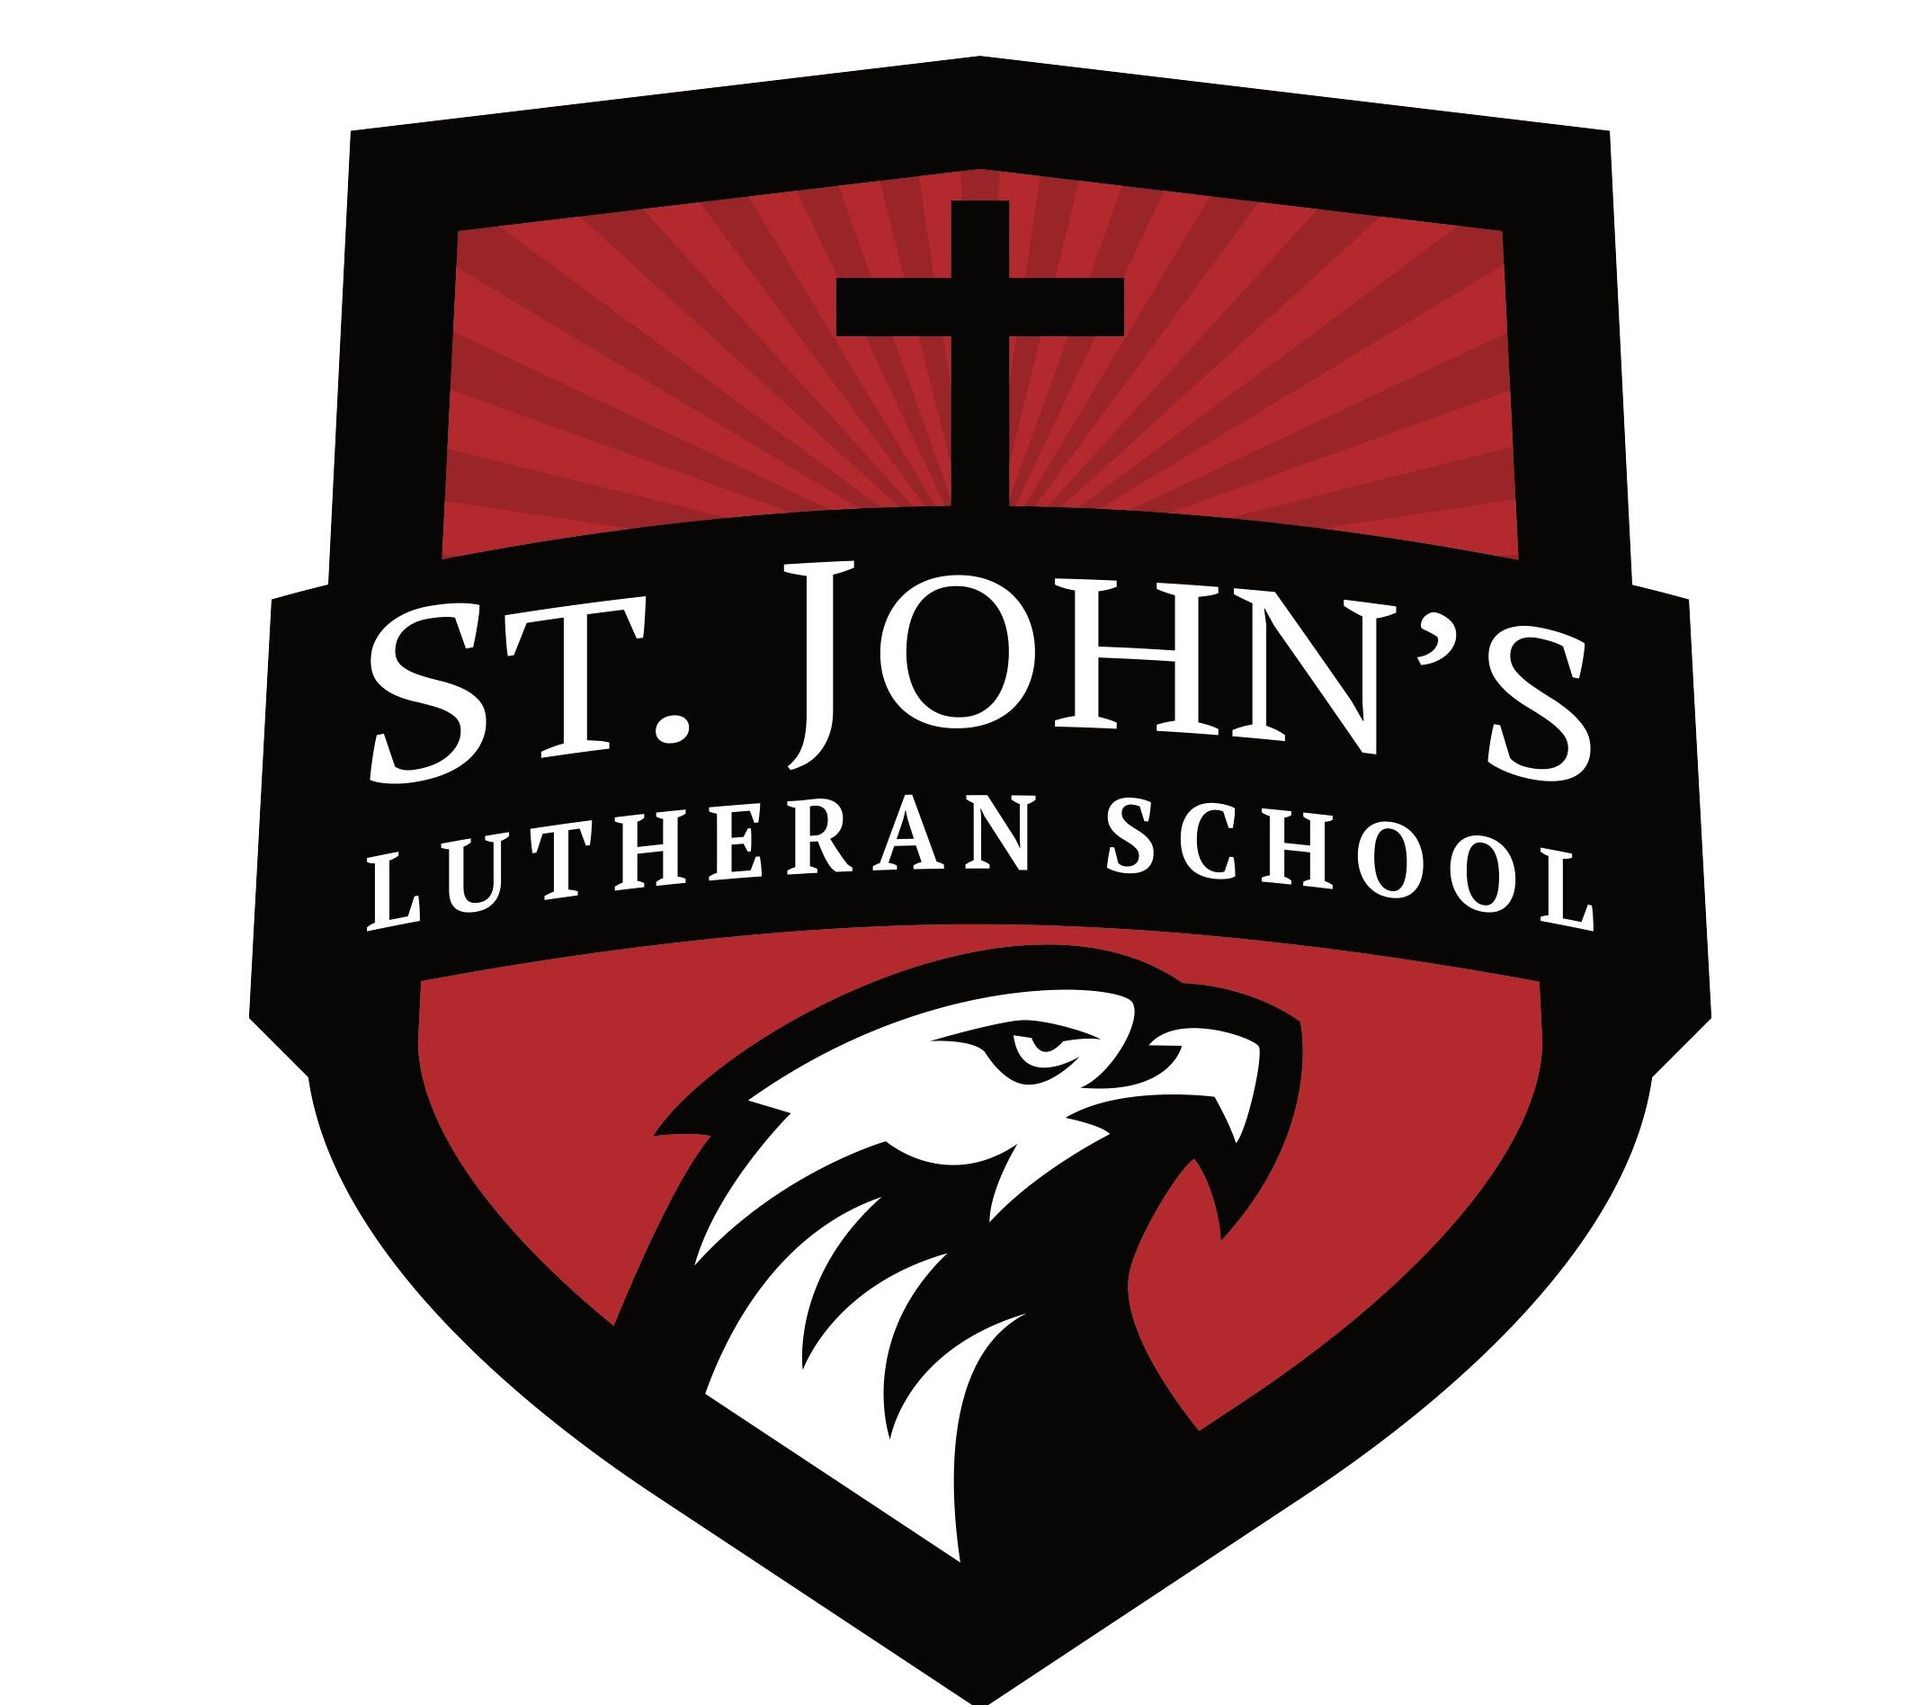 St John's Evangelical Lutheran